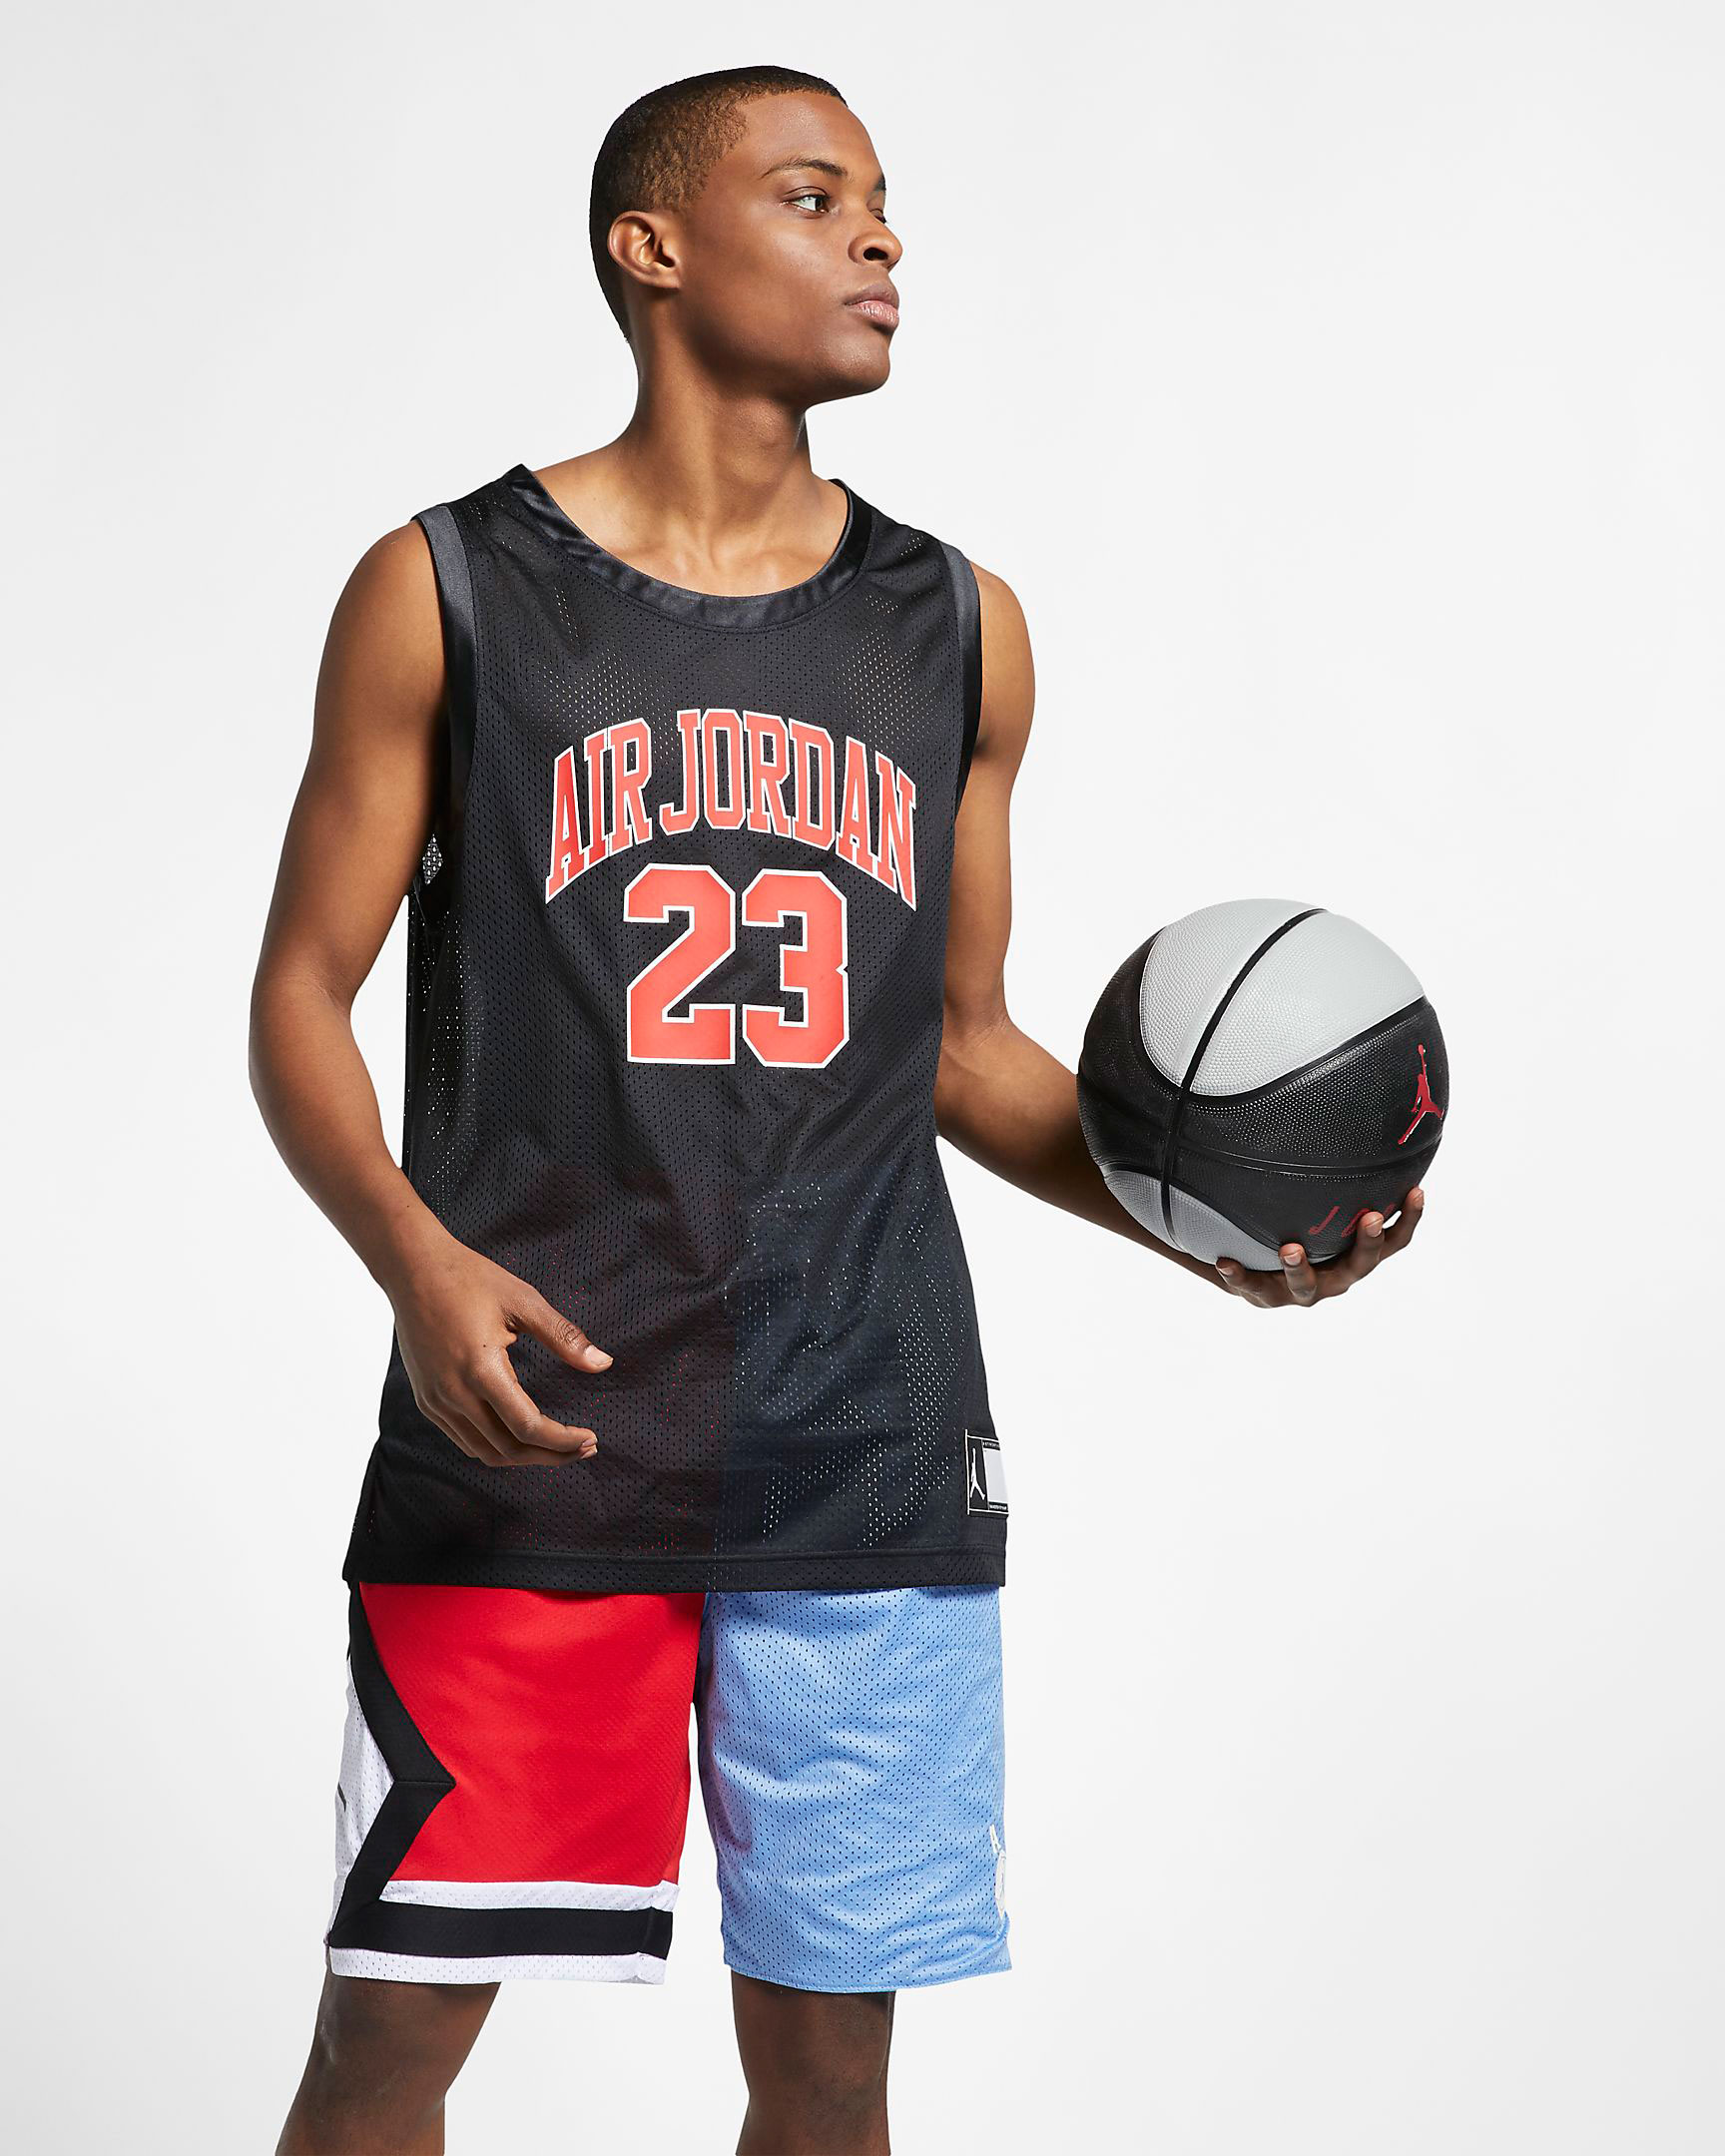 Air Jordan 4 Bred Jersey and Shorts Match | SneakerFits.com